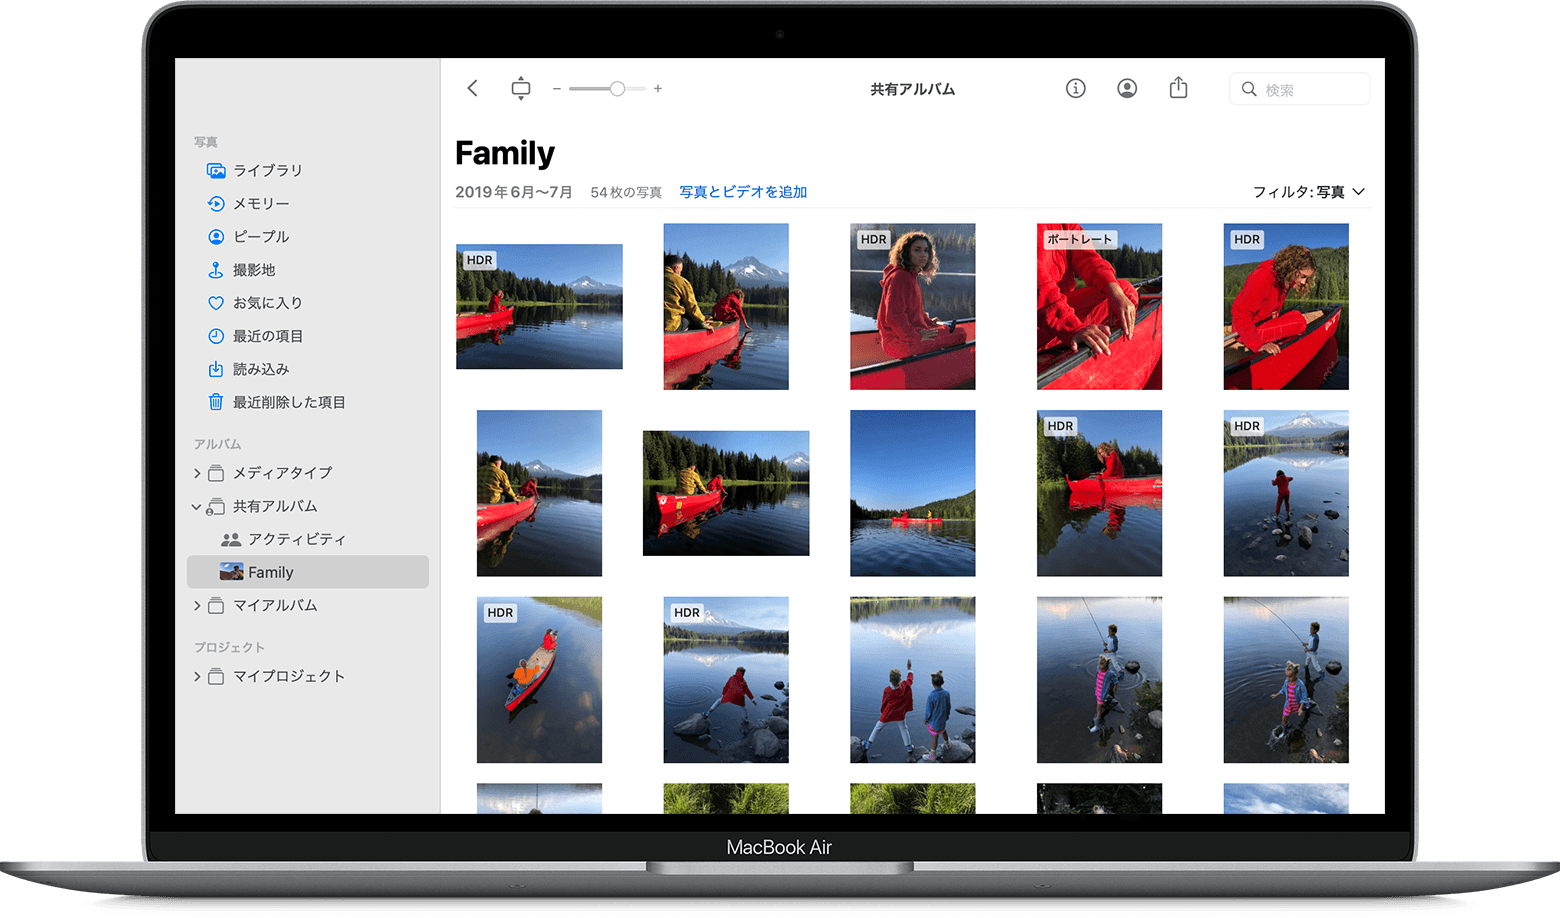 MacBook Air の写真 App で共有のファミリーアルバムが表示されているところ